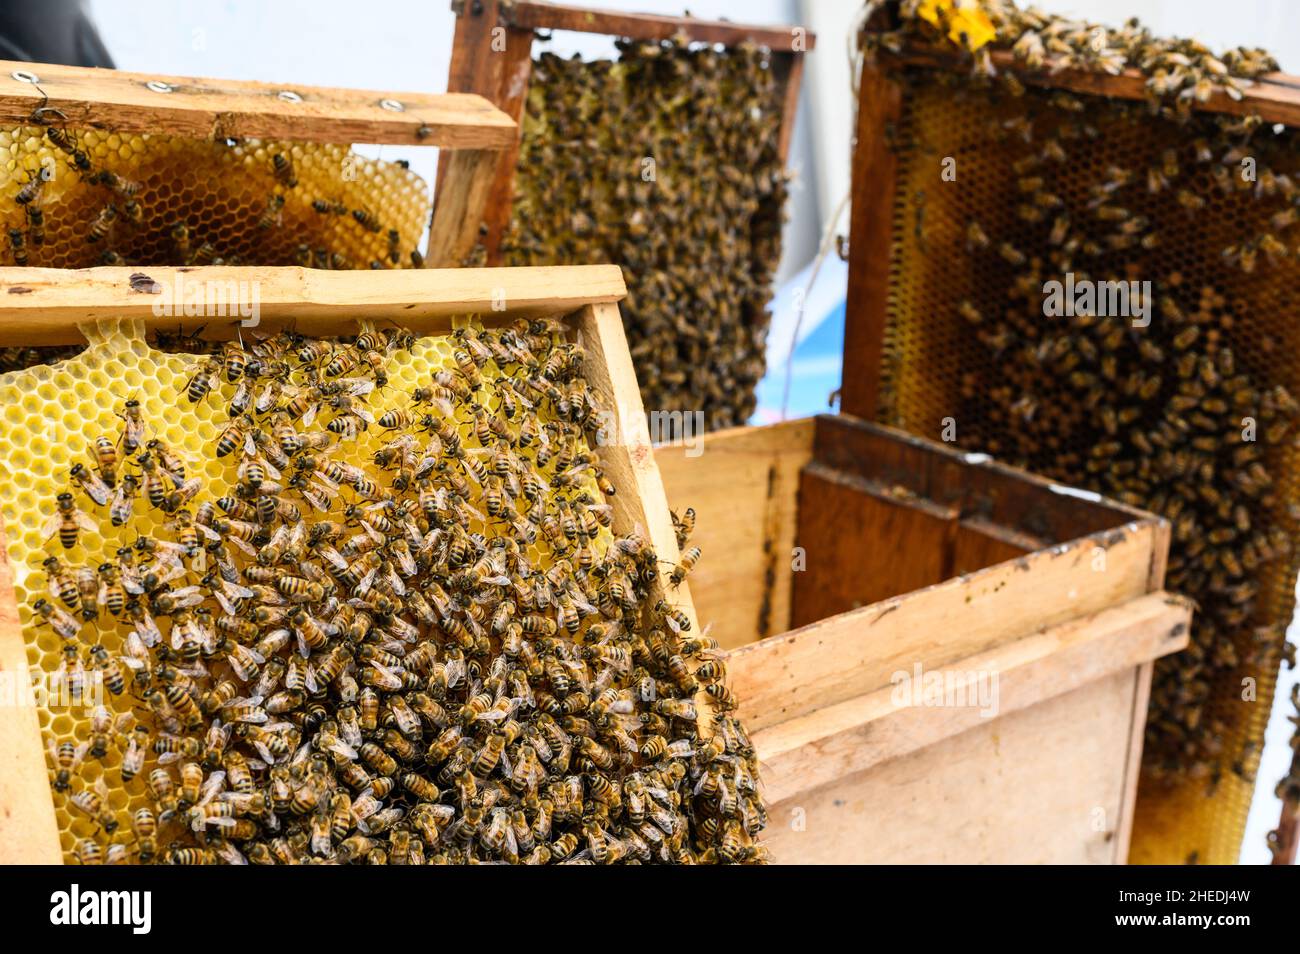 Red de comunicacion País de origen experimental Grupo de abejas en su hábitat natural Fotografía de stock - Alamy